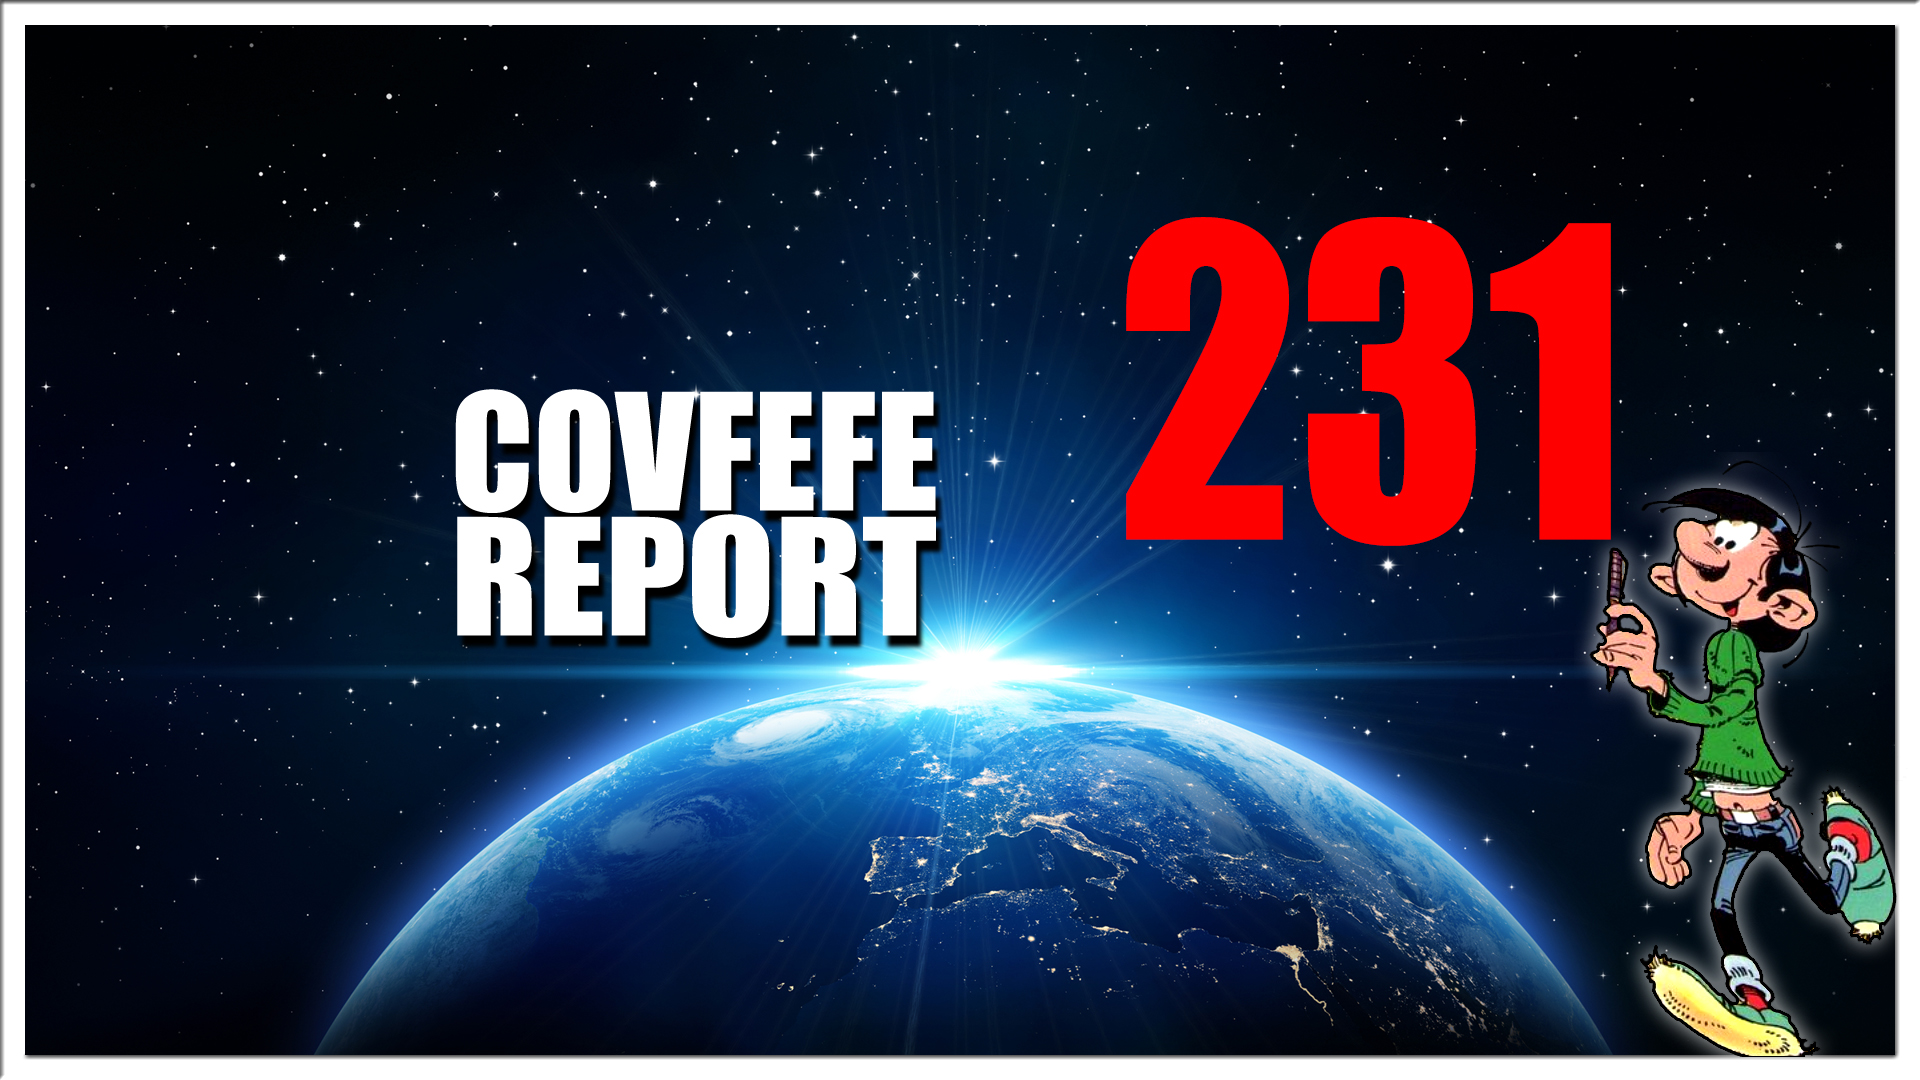 Covfefe Report 231. ngt